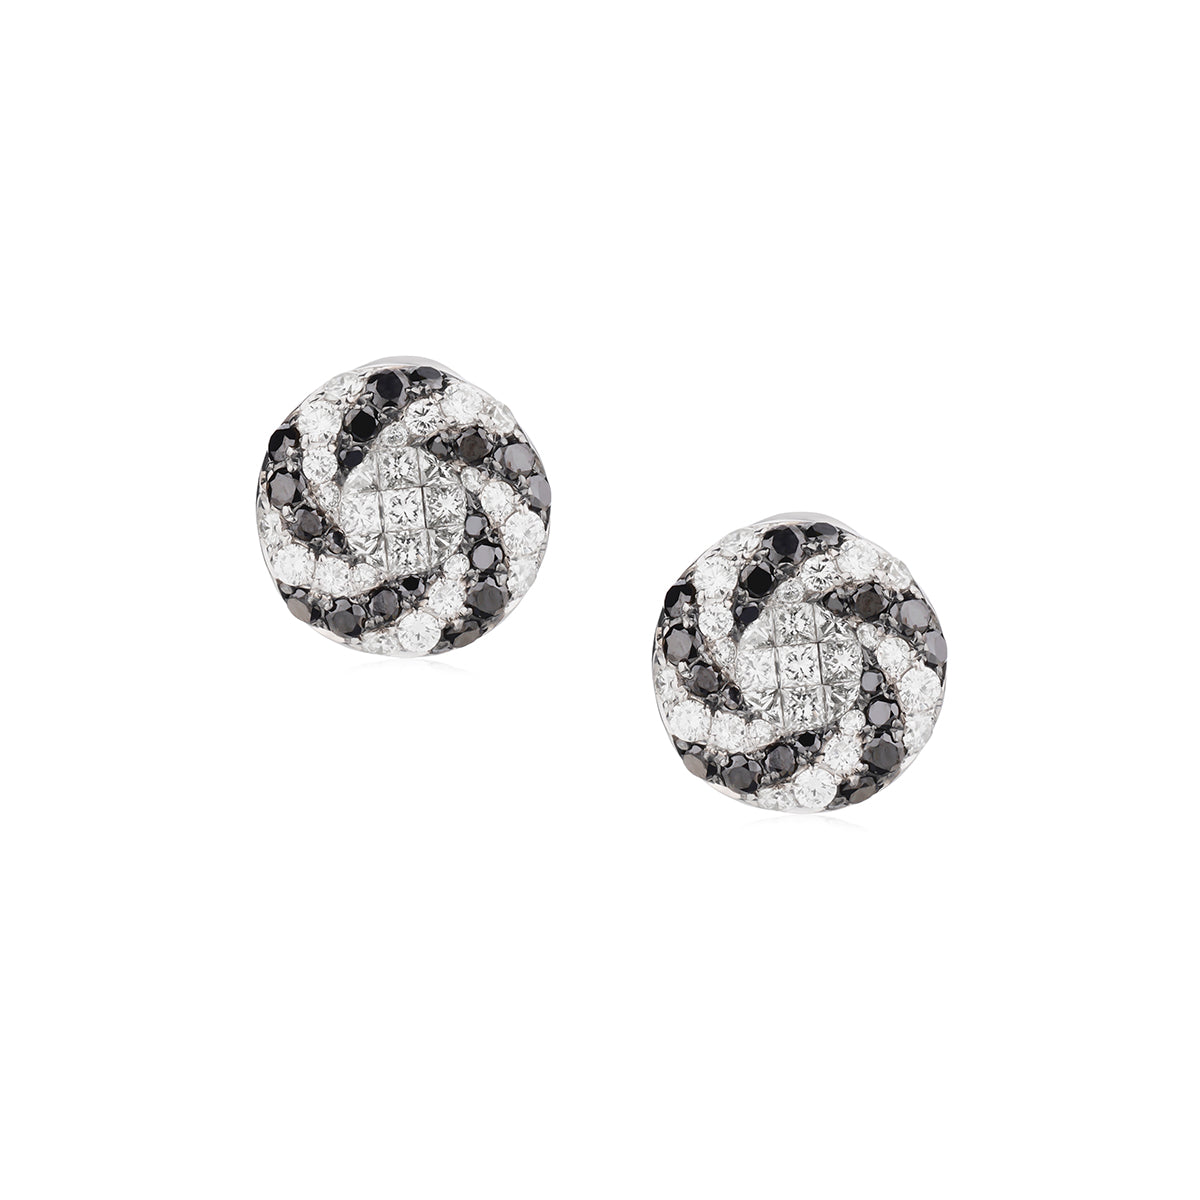 Ladies 18kt White Gold Black and White Diamond Swirl Stud Earrings.